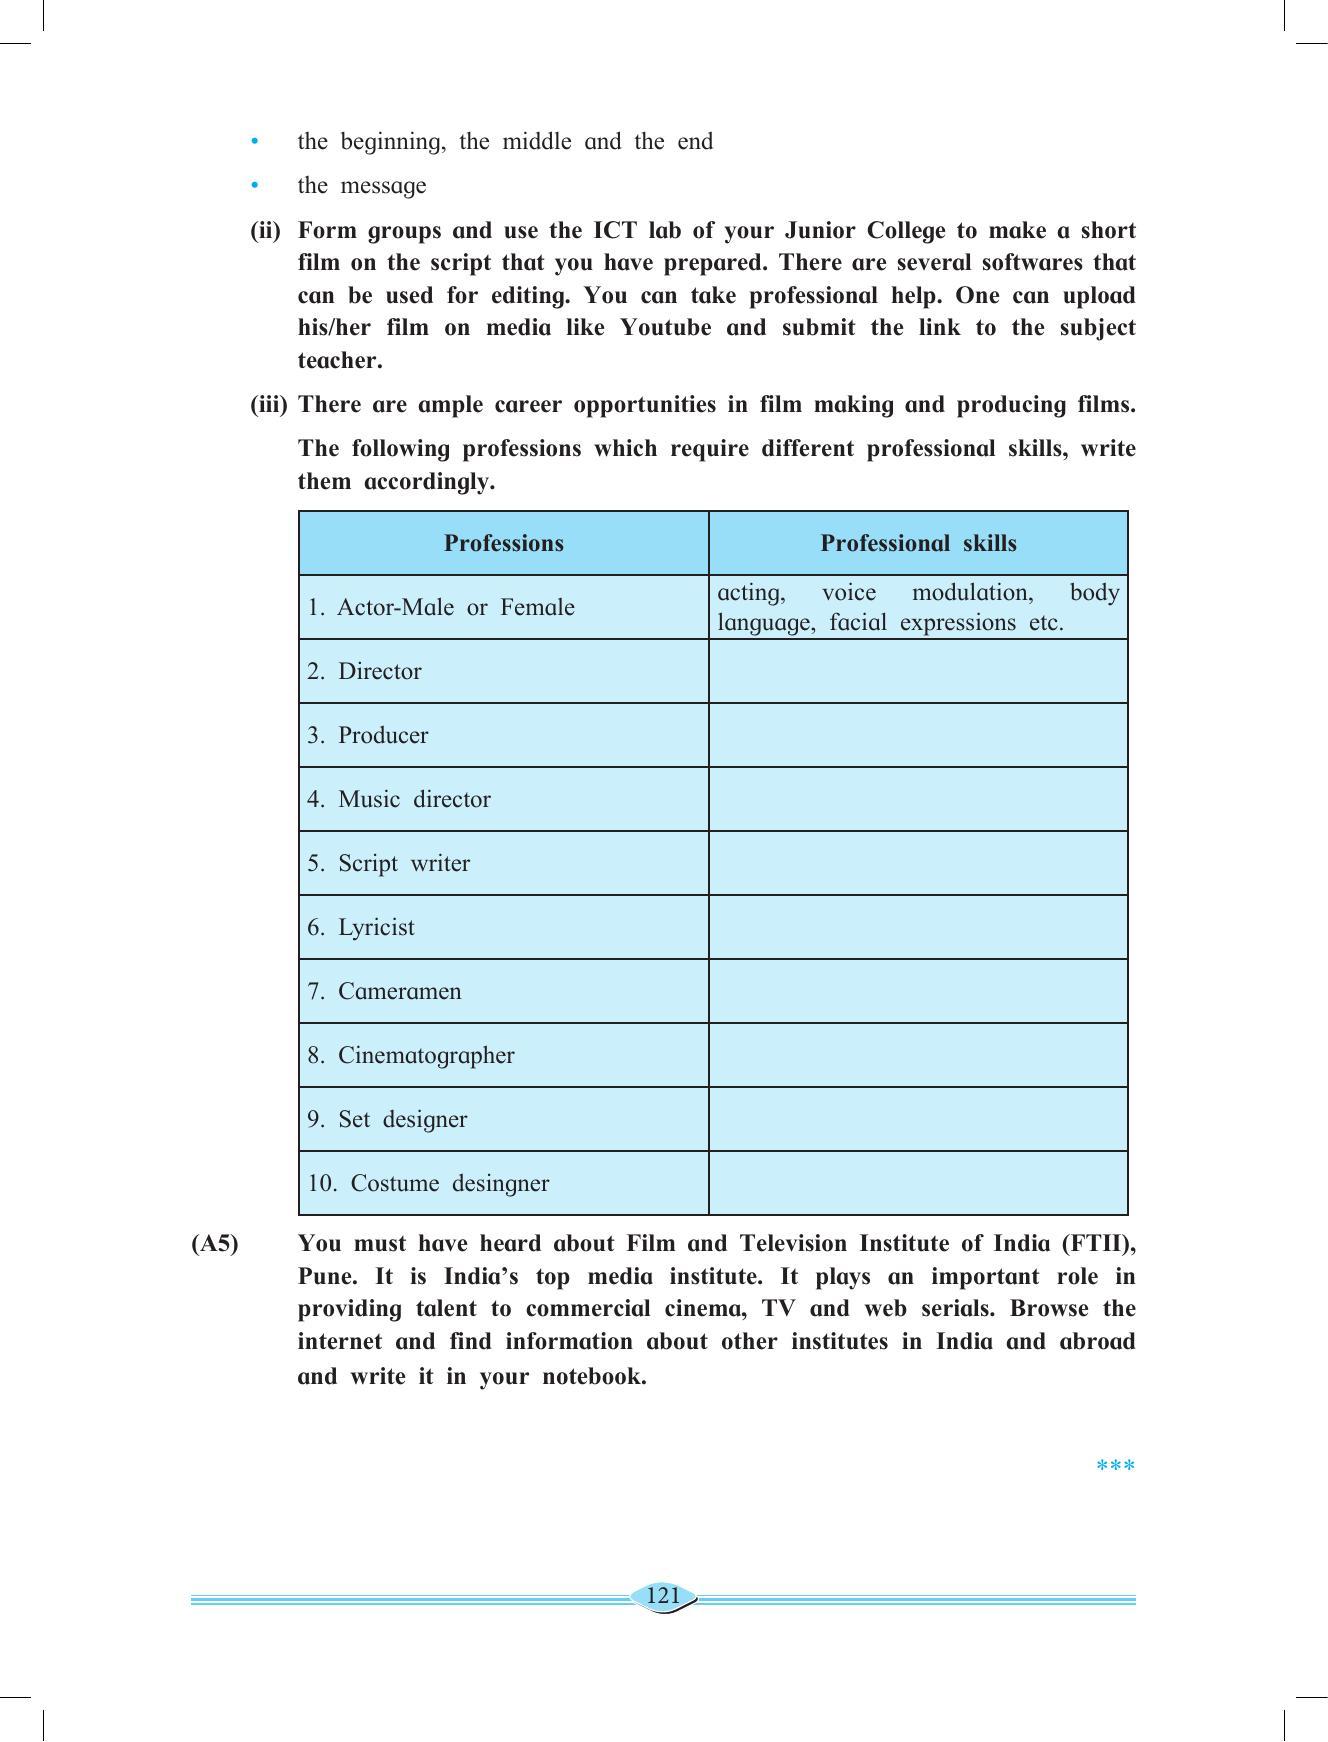 Maharashtra Board Class 11 English Textbook - Page 135